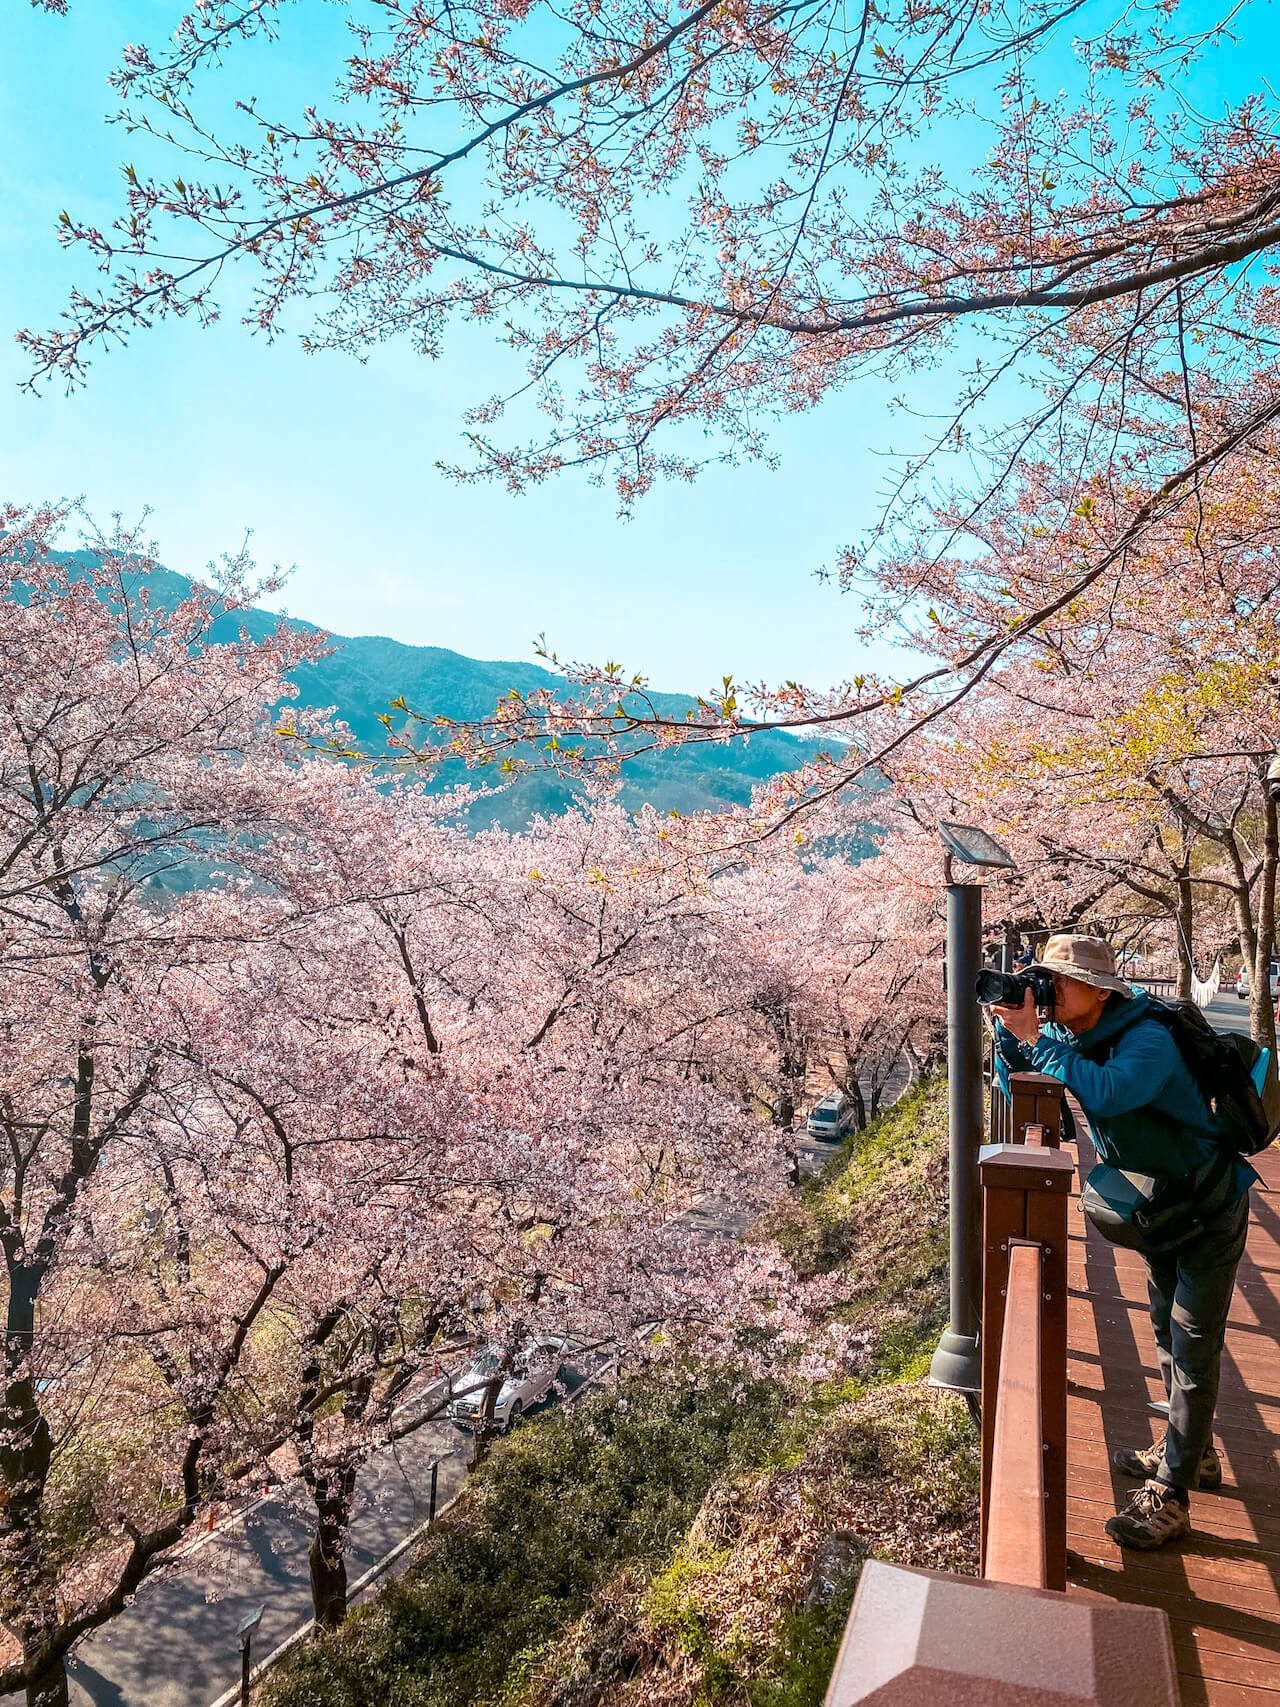 korea in april | 10-ri cherry blossom trail in hadong, south korea